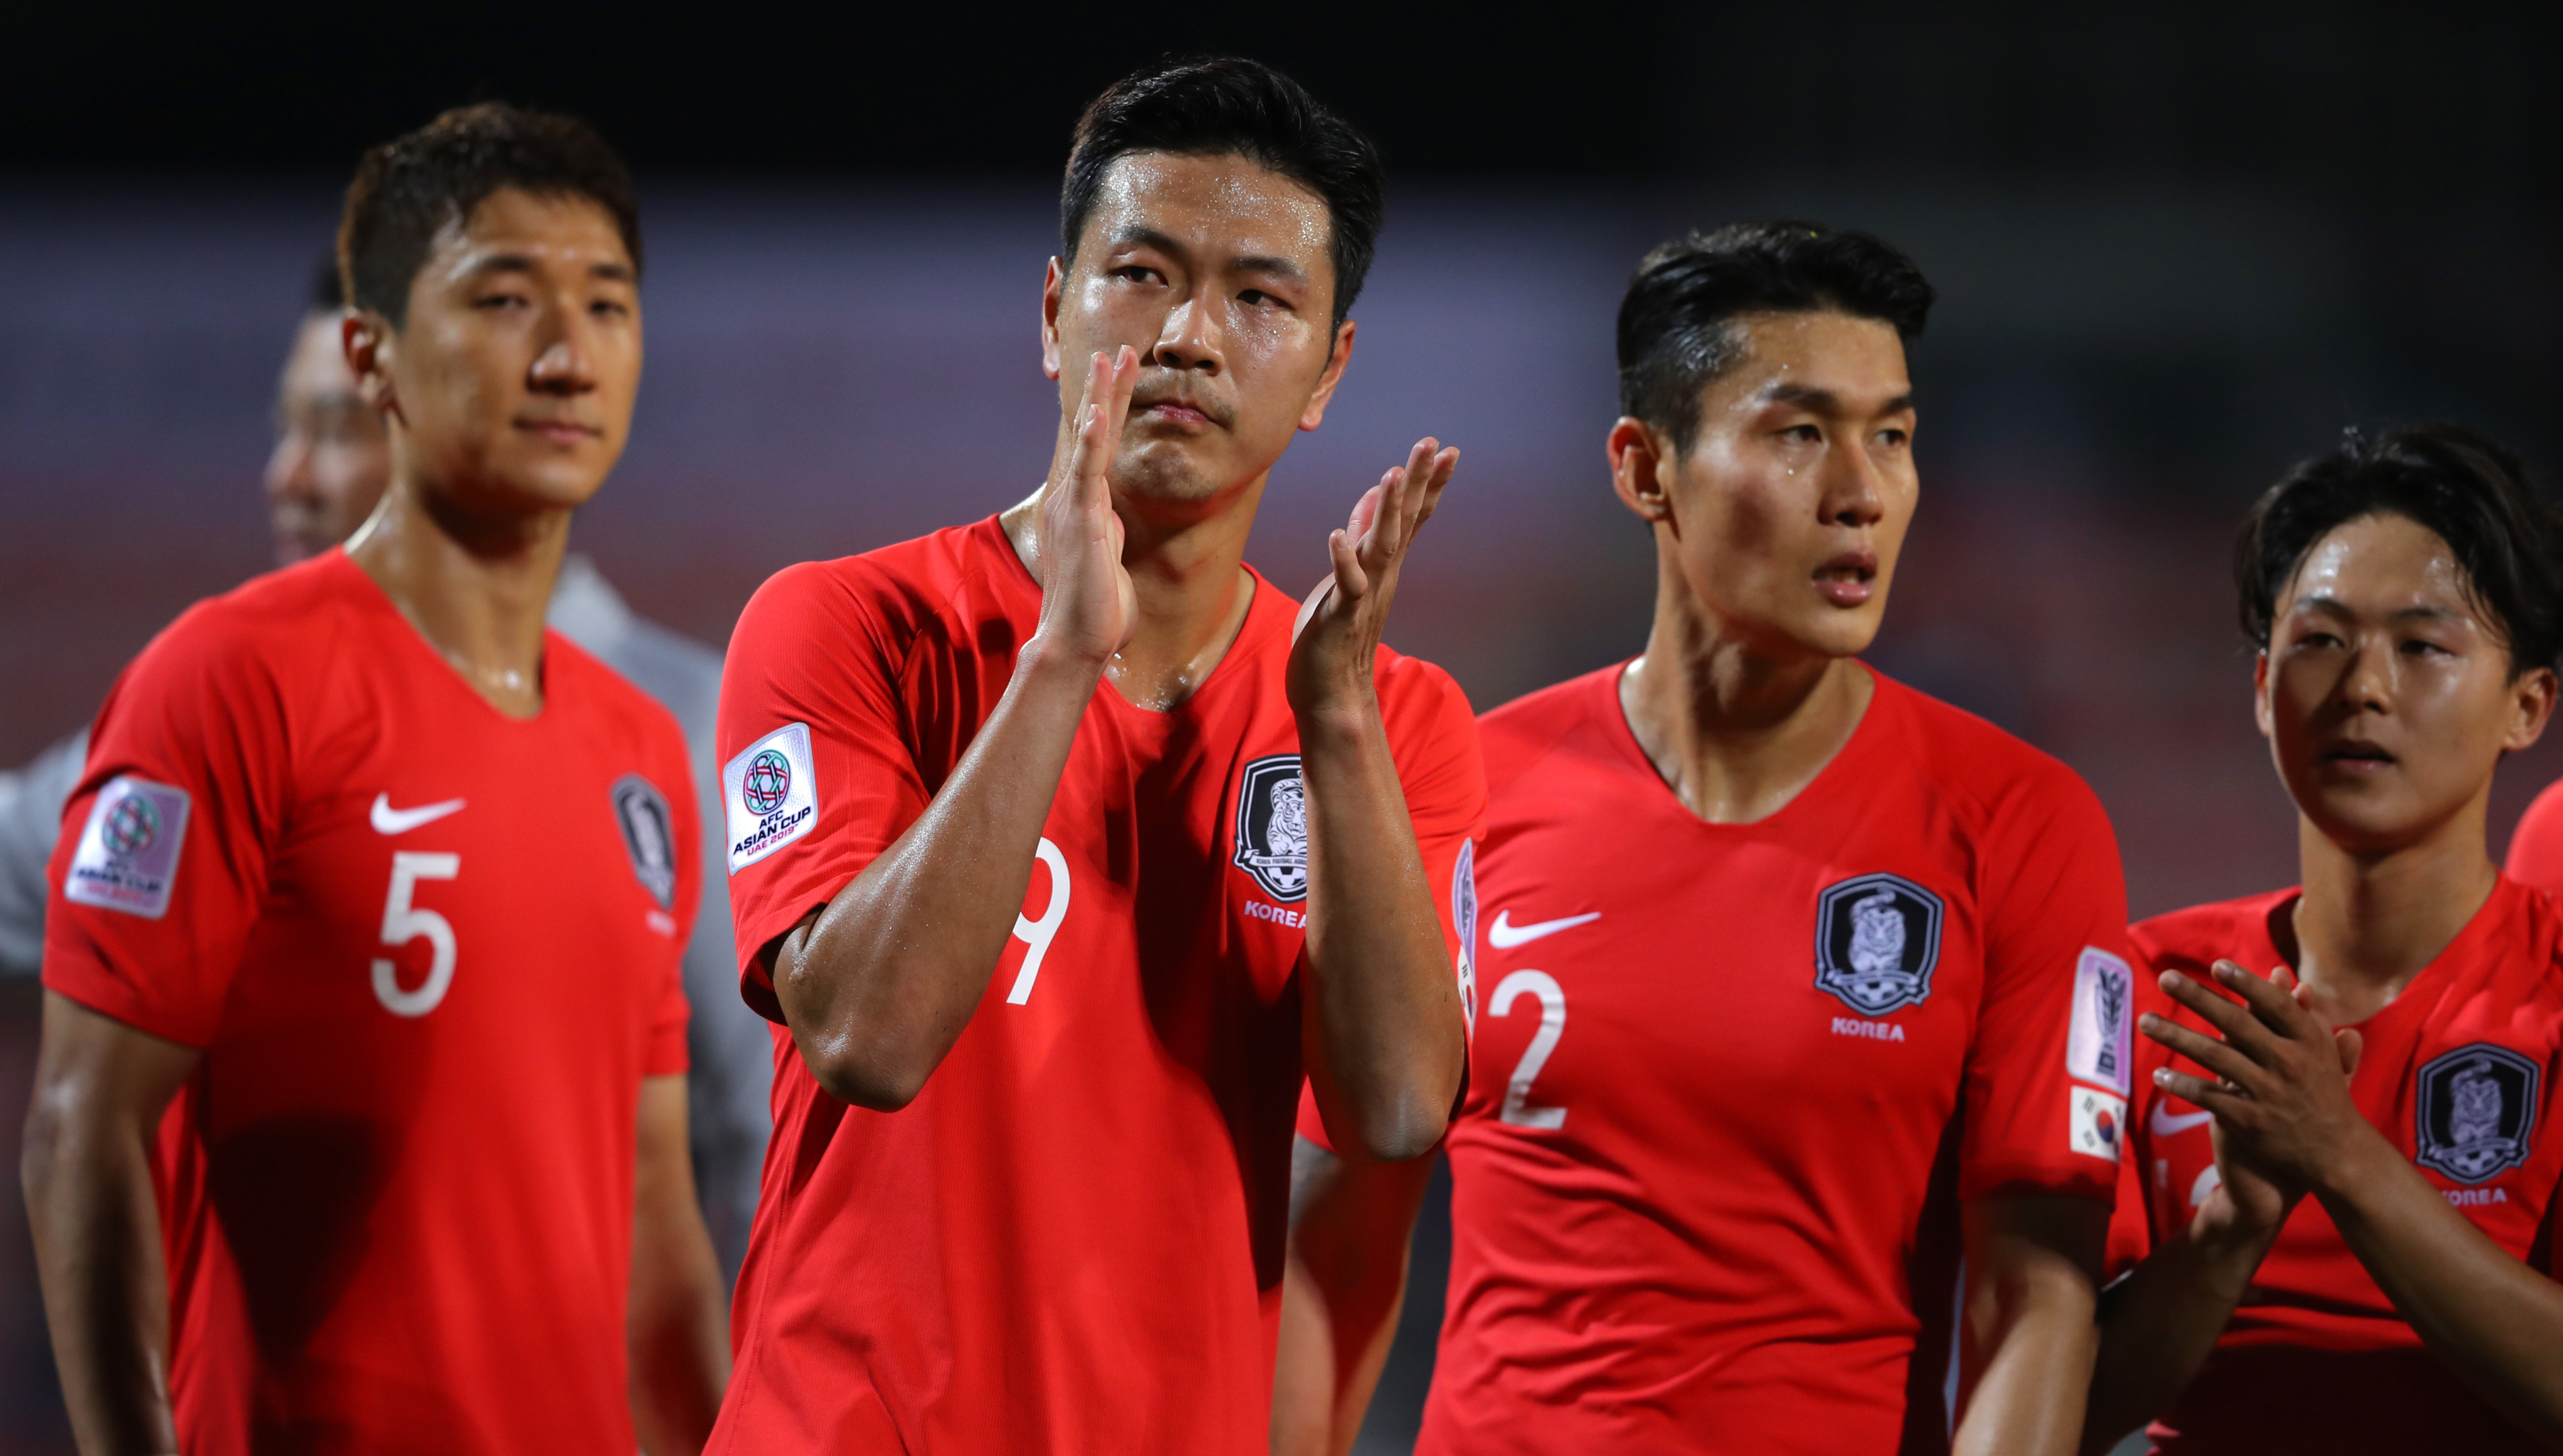 korea soccer jersey 2019